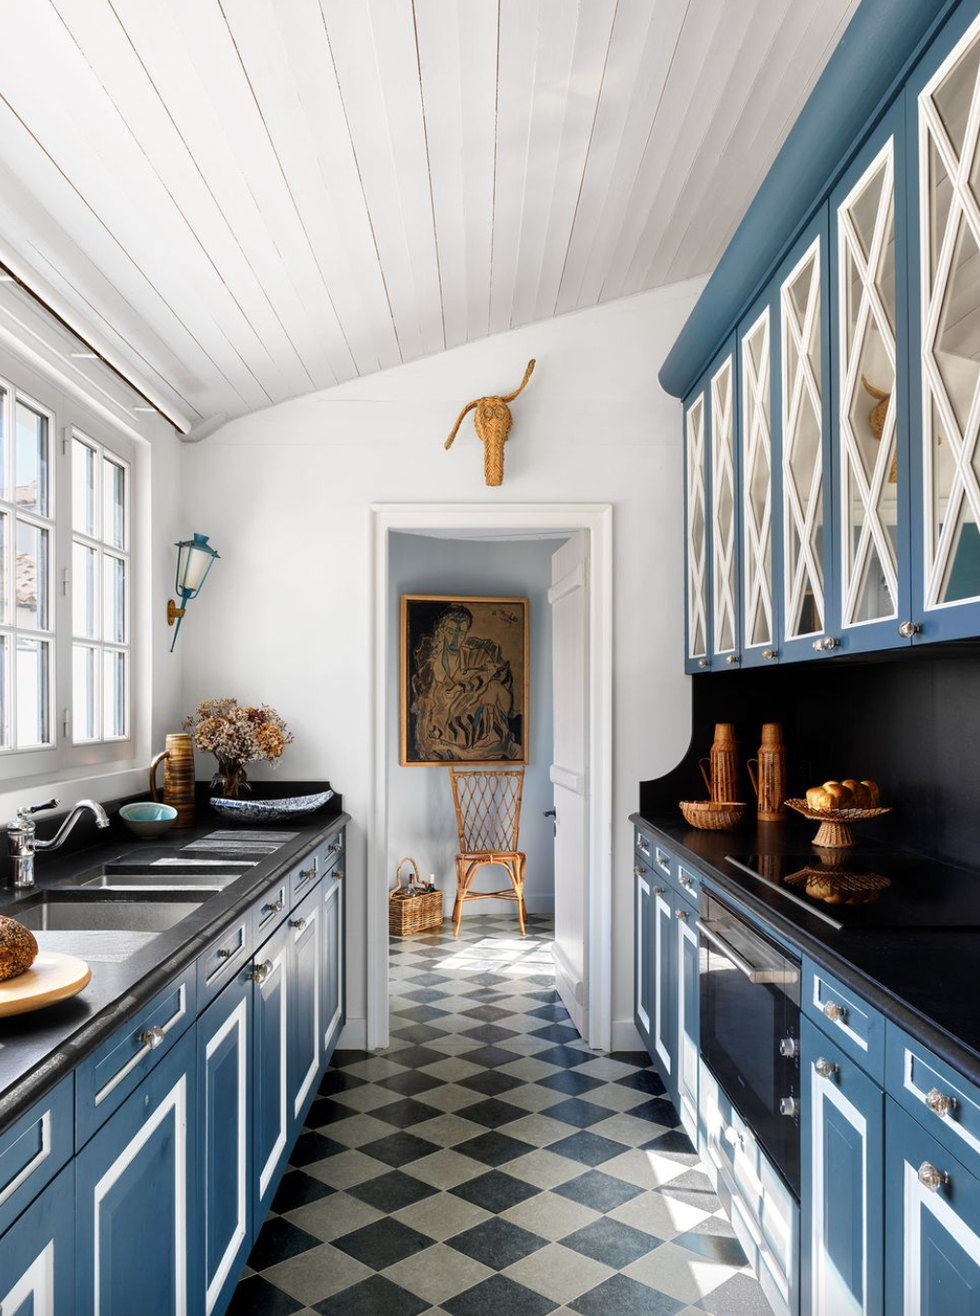 White and Blue Kitchen with Viking Range - Transitional - Kitchen